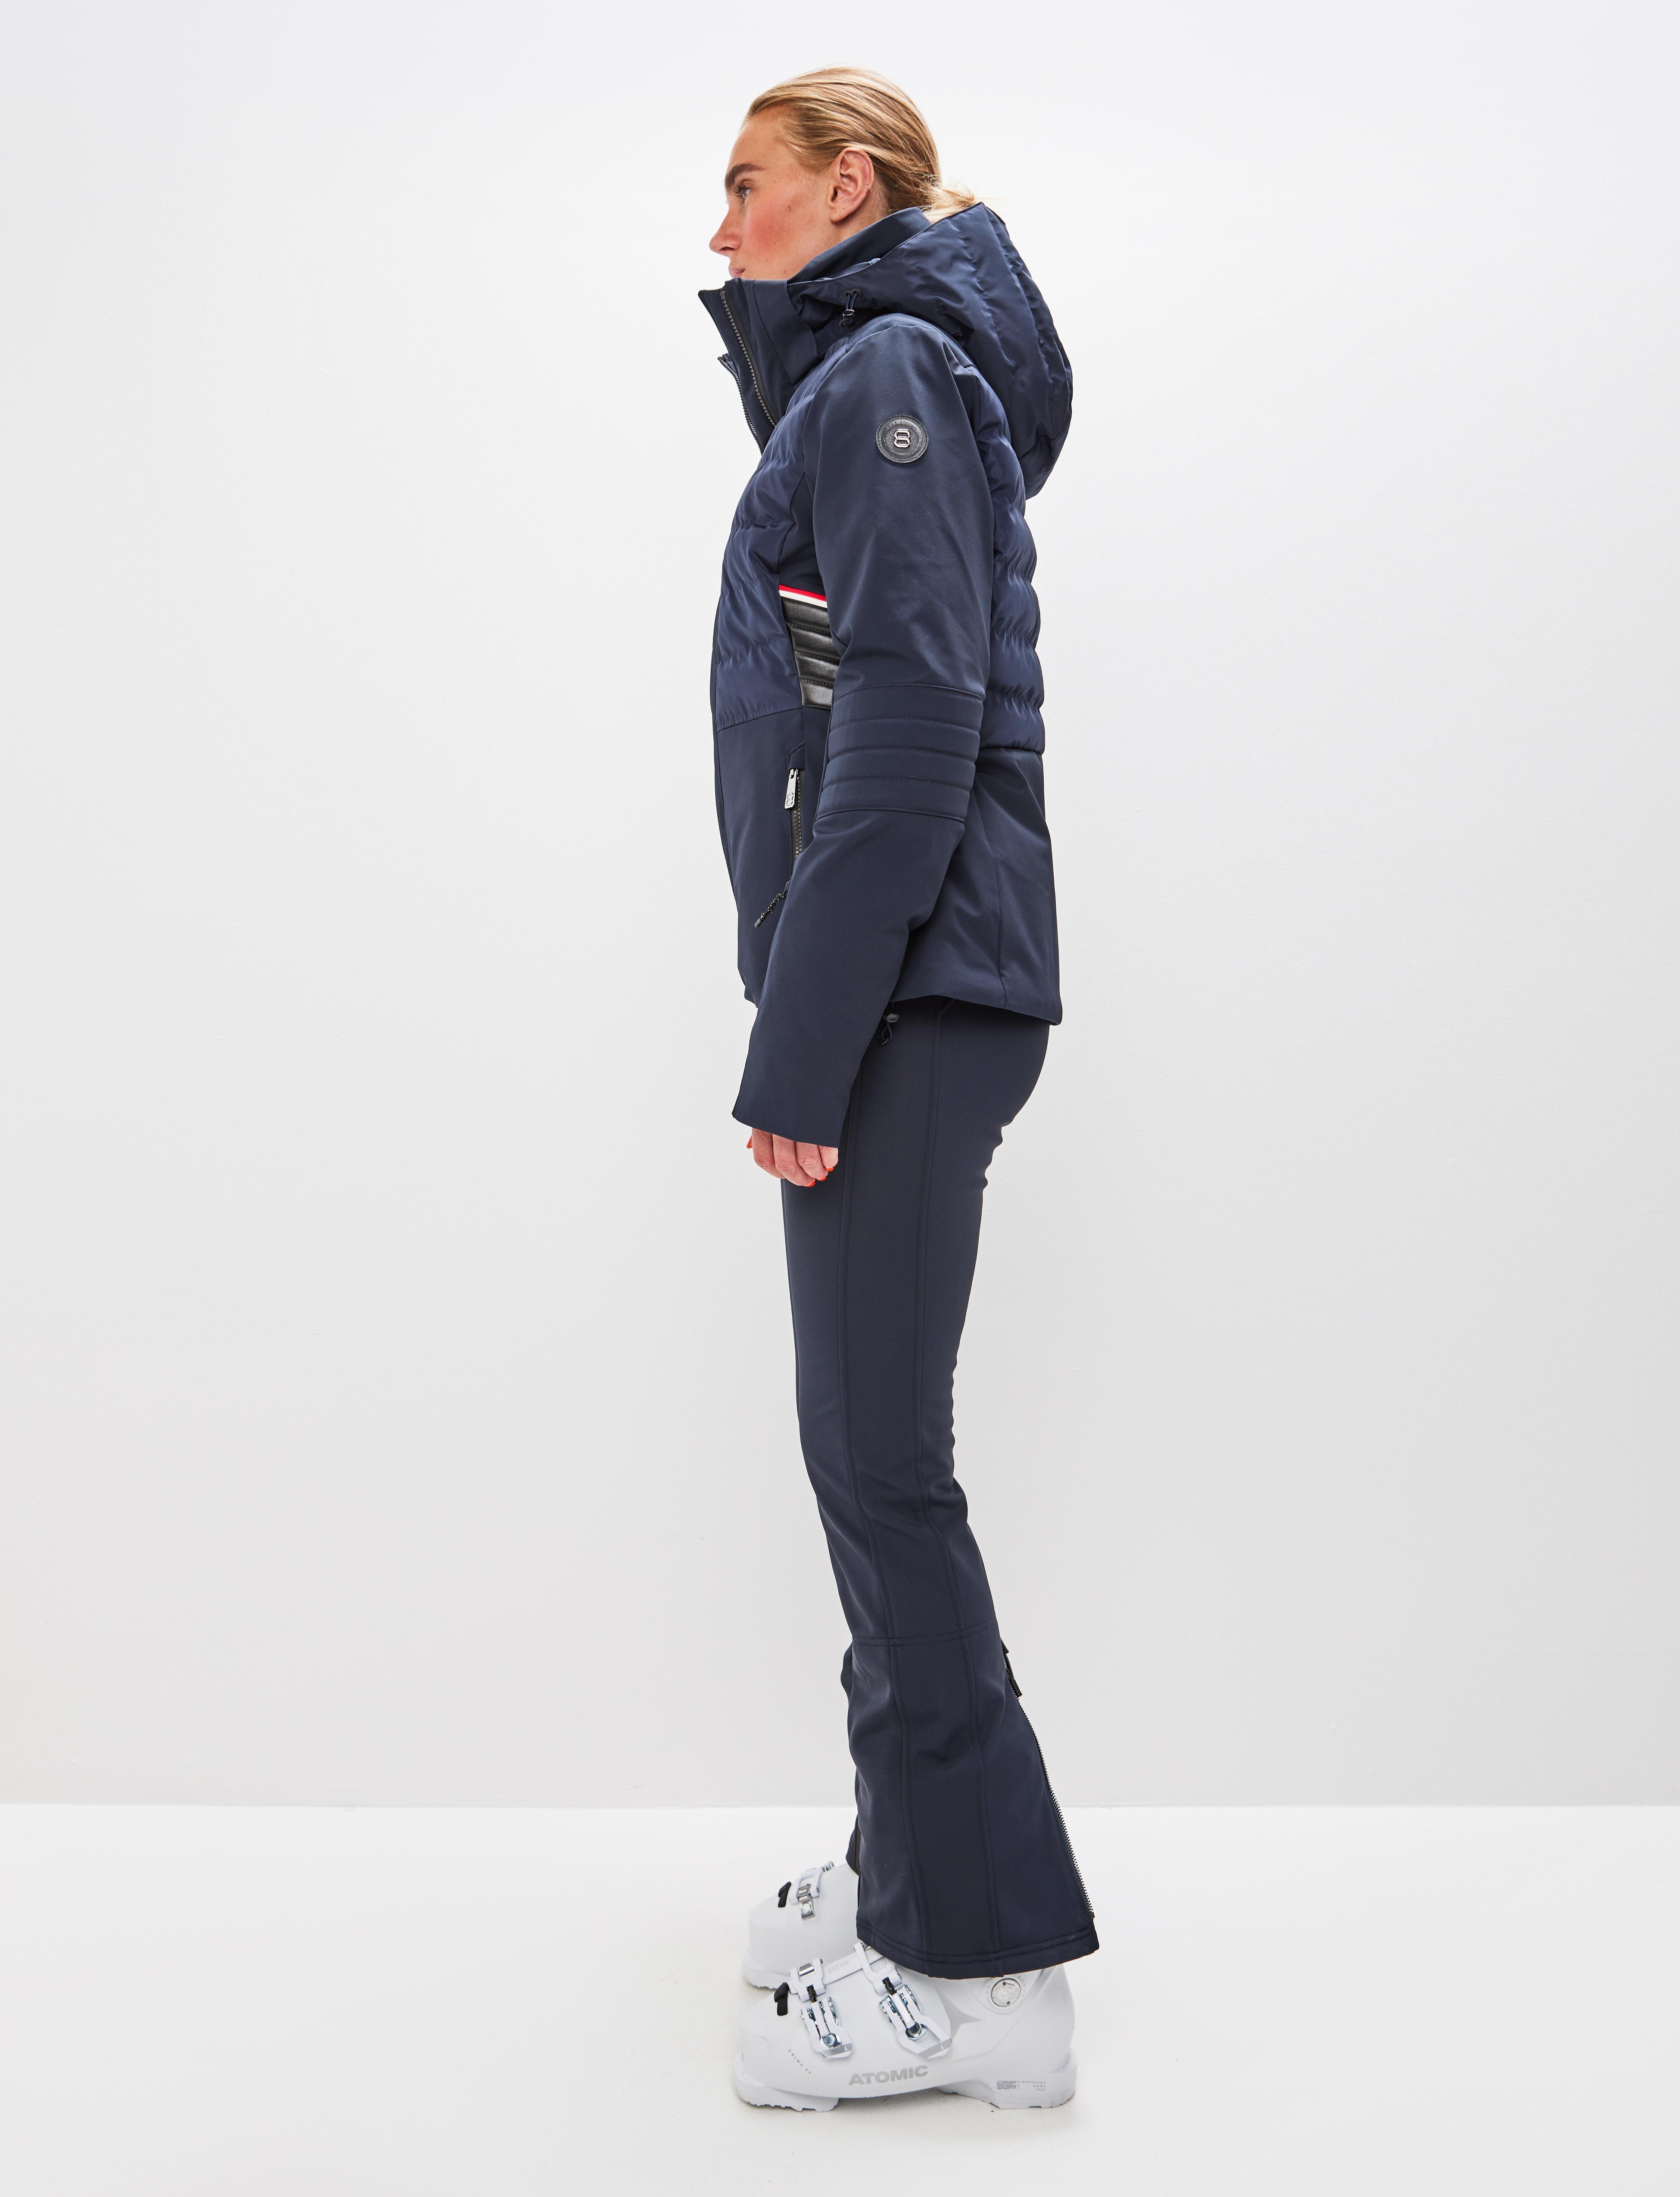 Essener W Jacket navy - Short blue ski jacket